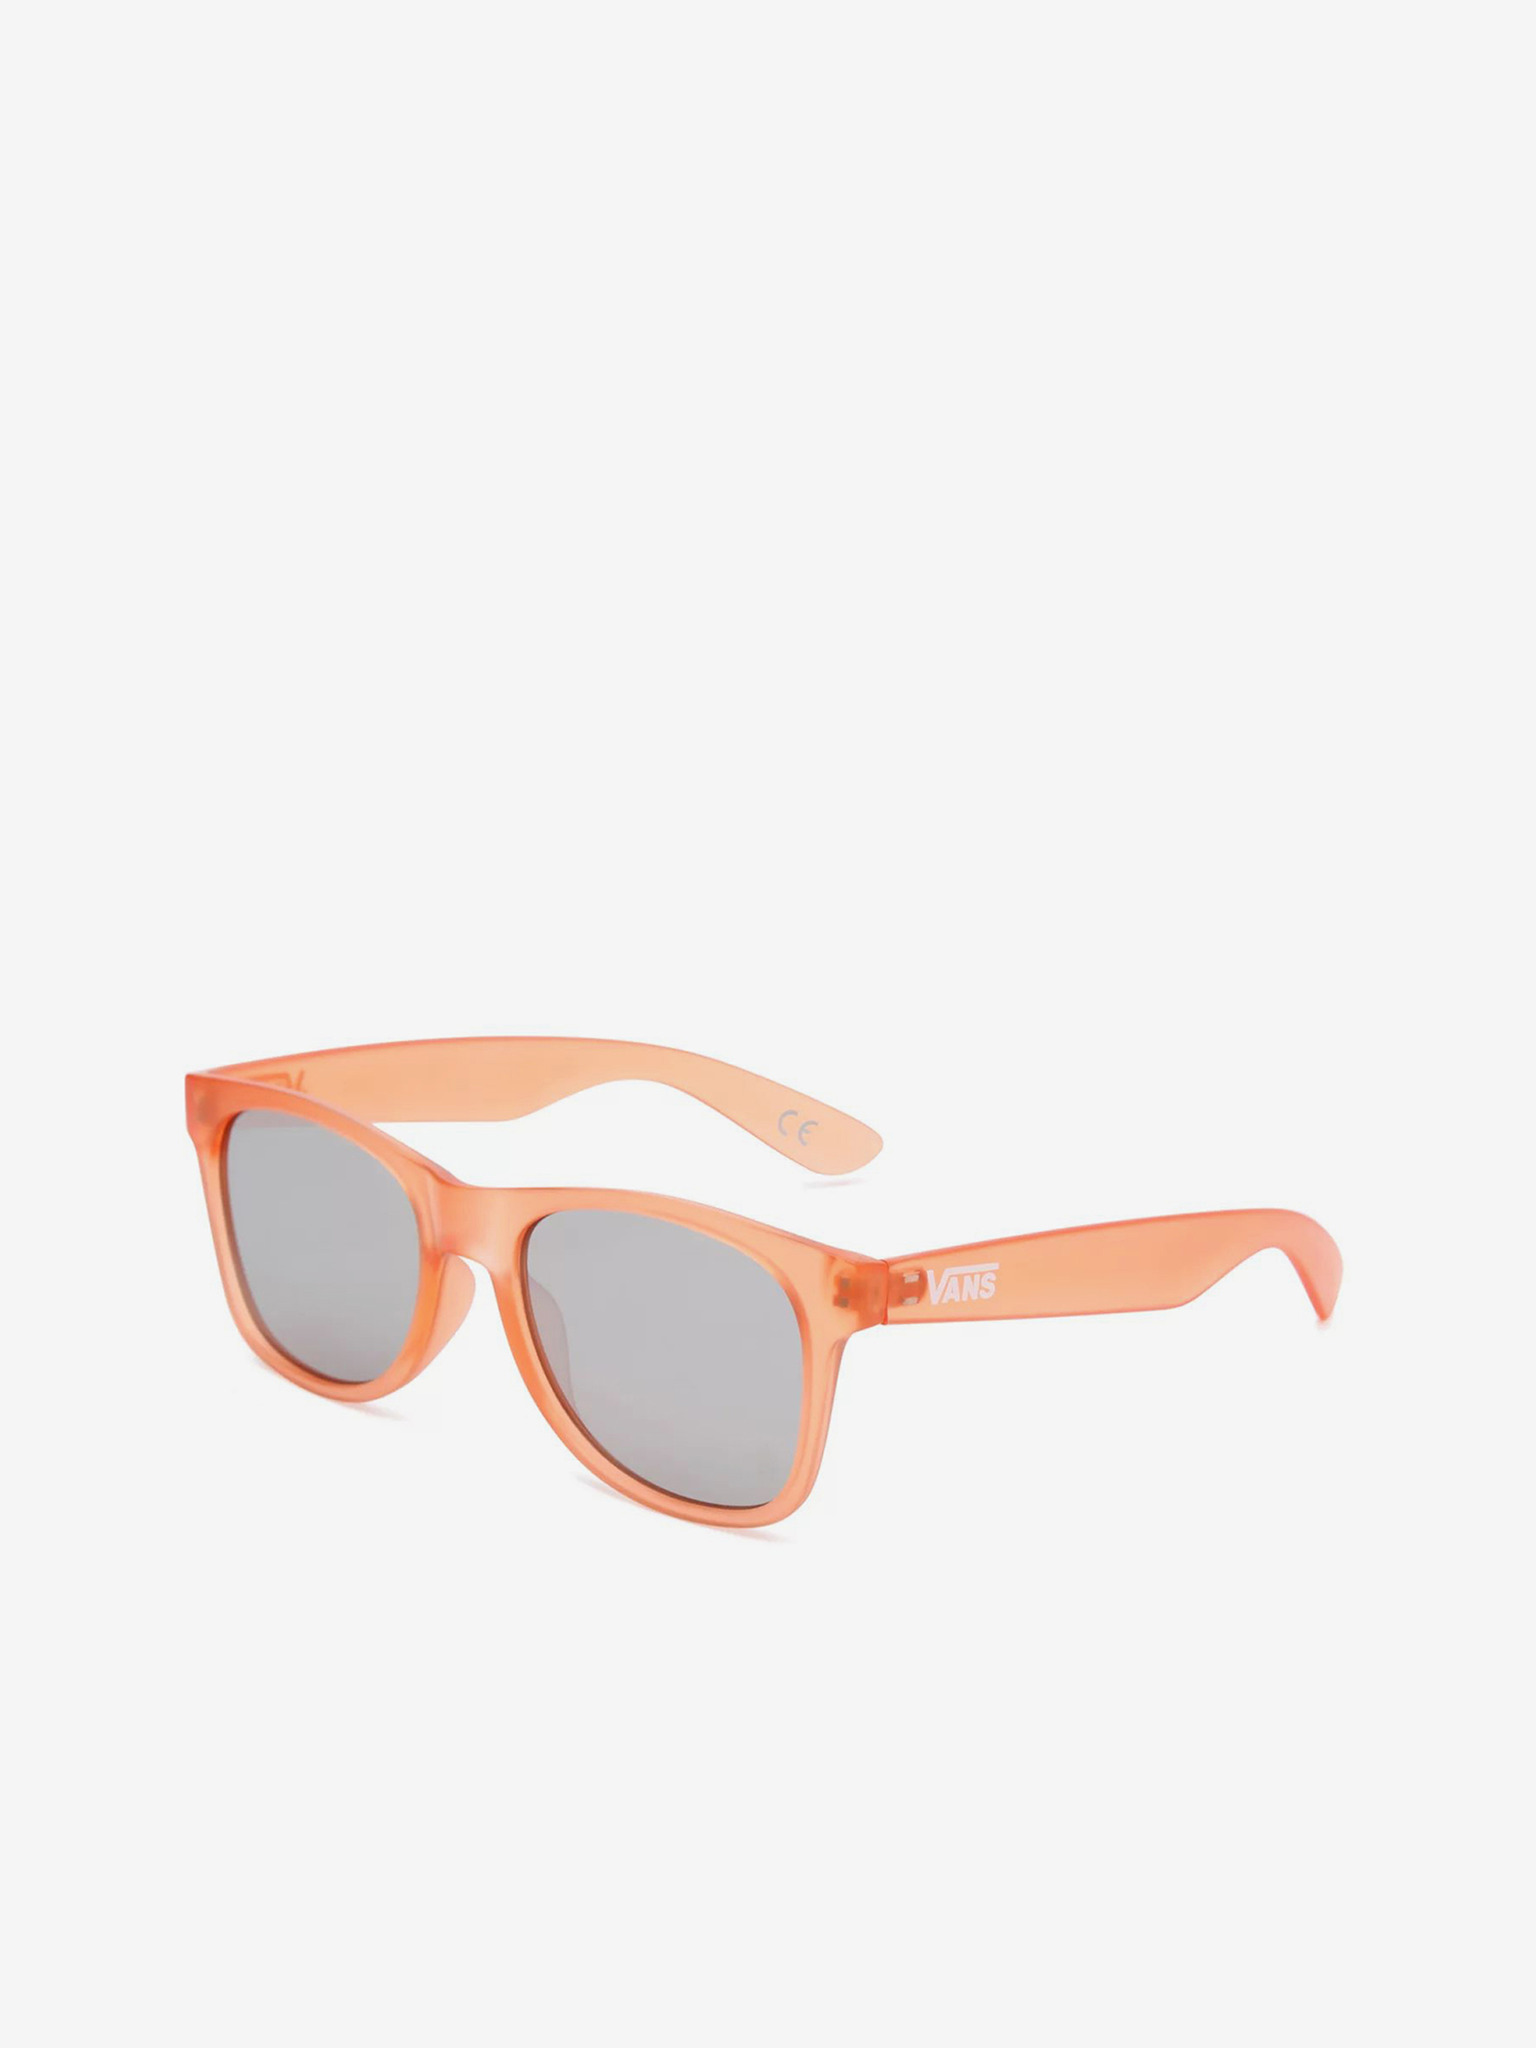 Flat Spicoli Sunglasses Vans Shades -